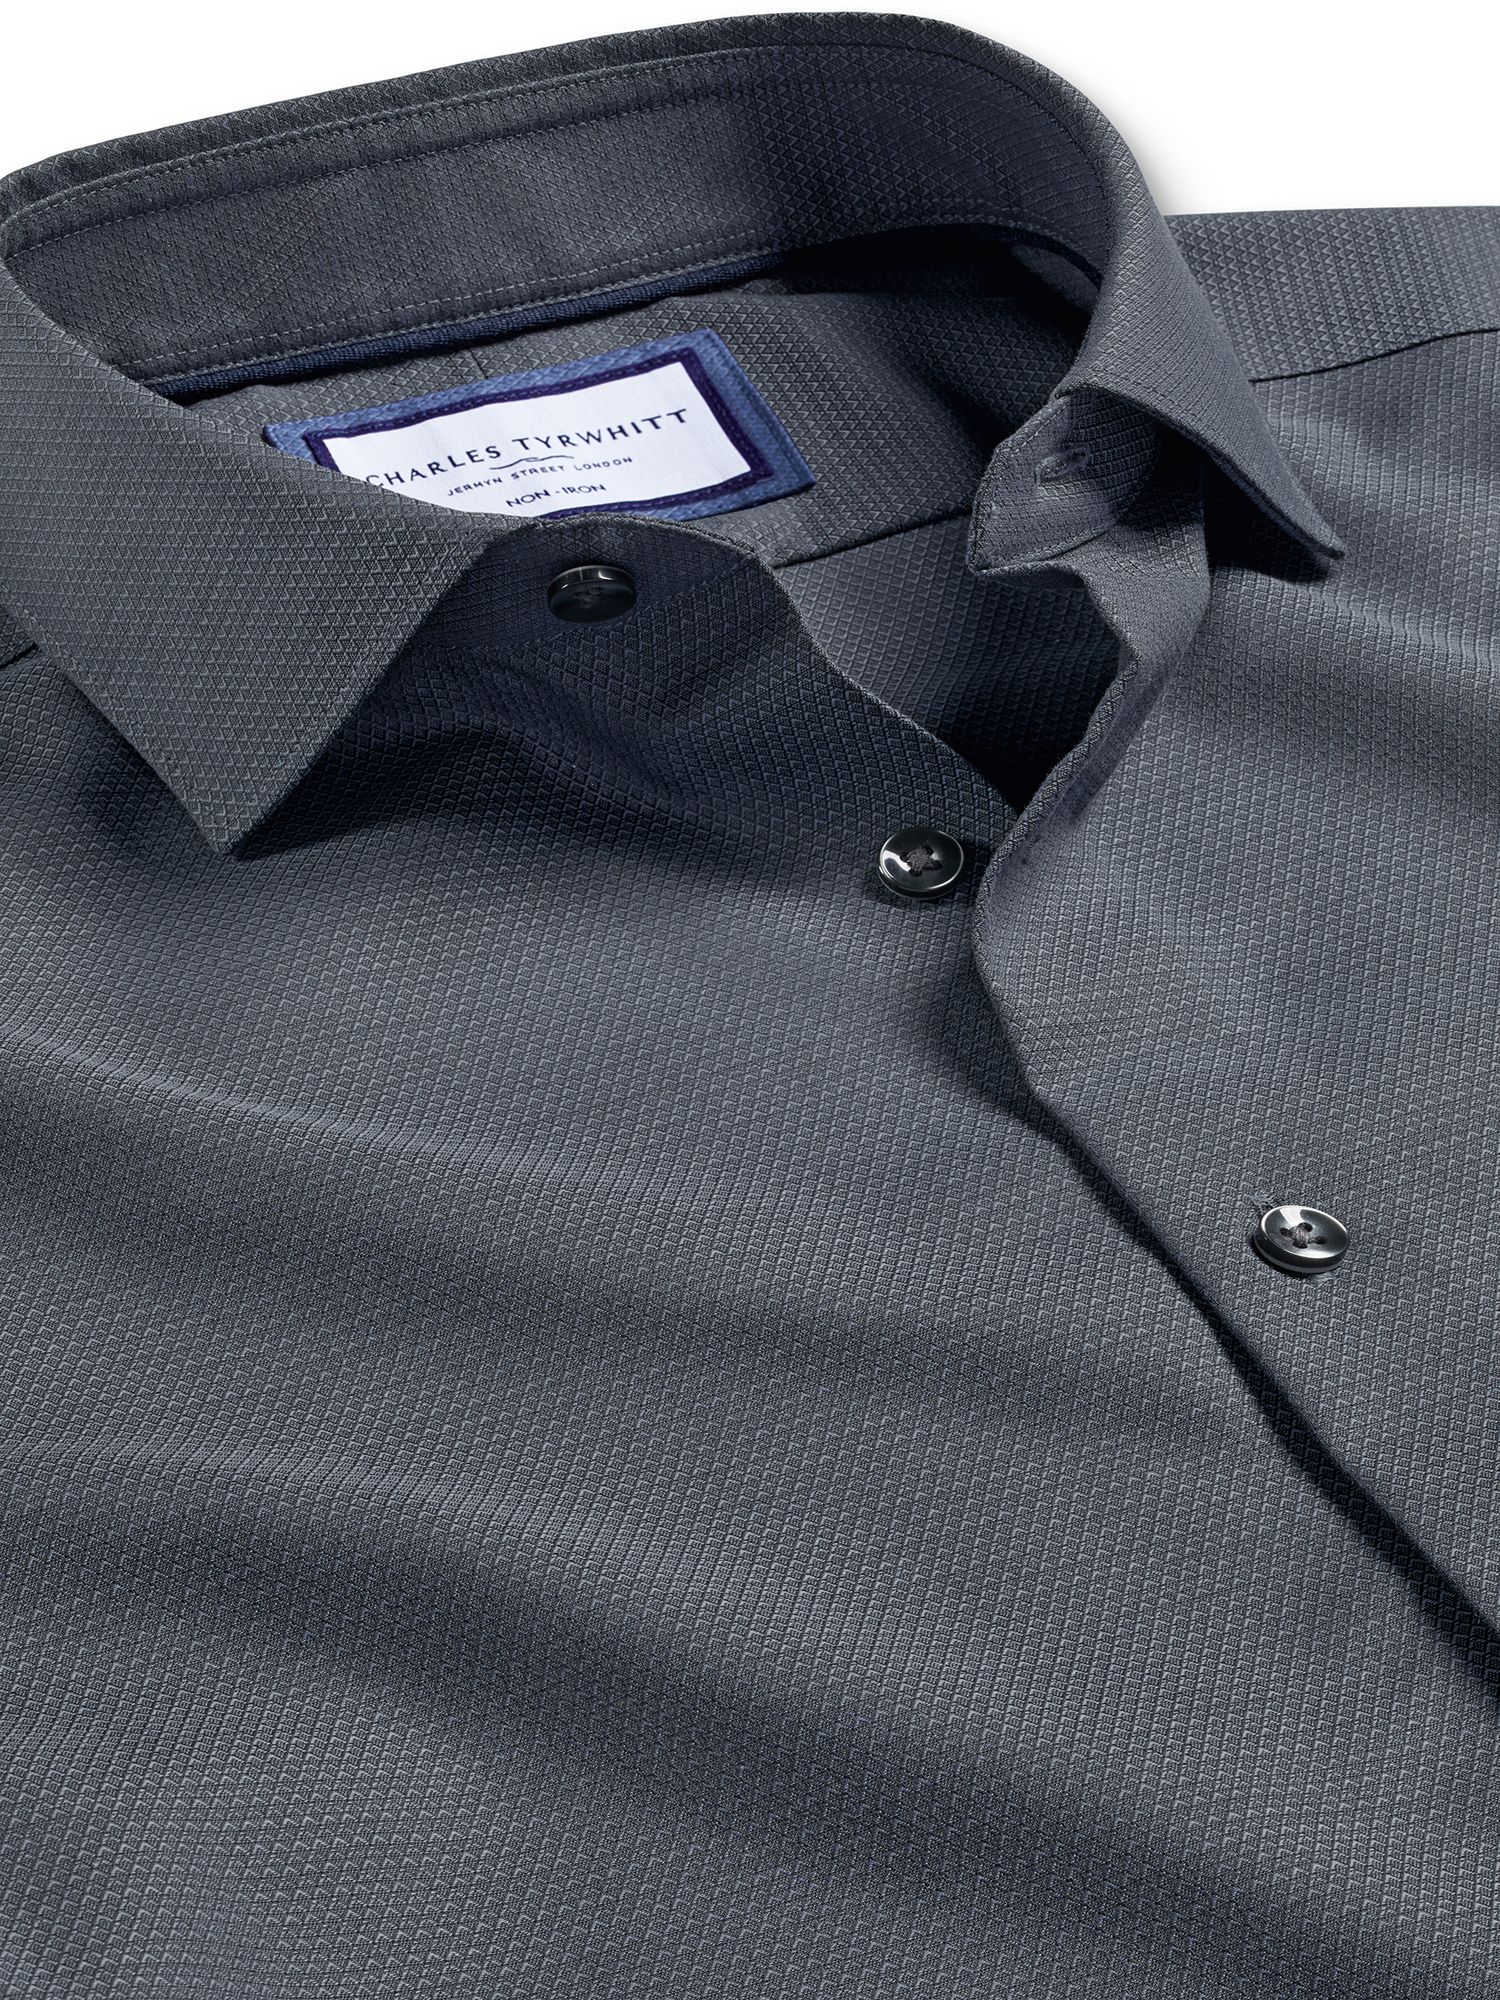 Charles Tyrwhitt Diamond Stretch Texture Non-Iron Slim Fit Shirt, Charcoal Grey, 14.5